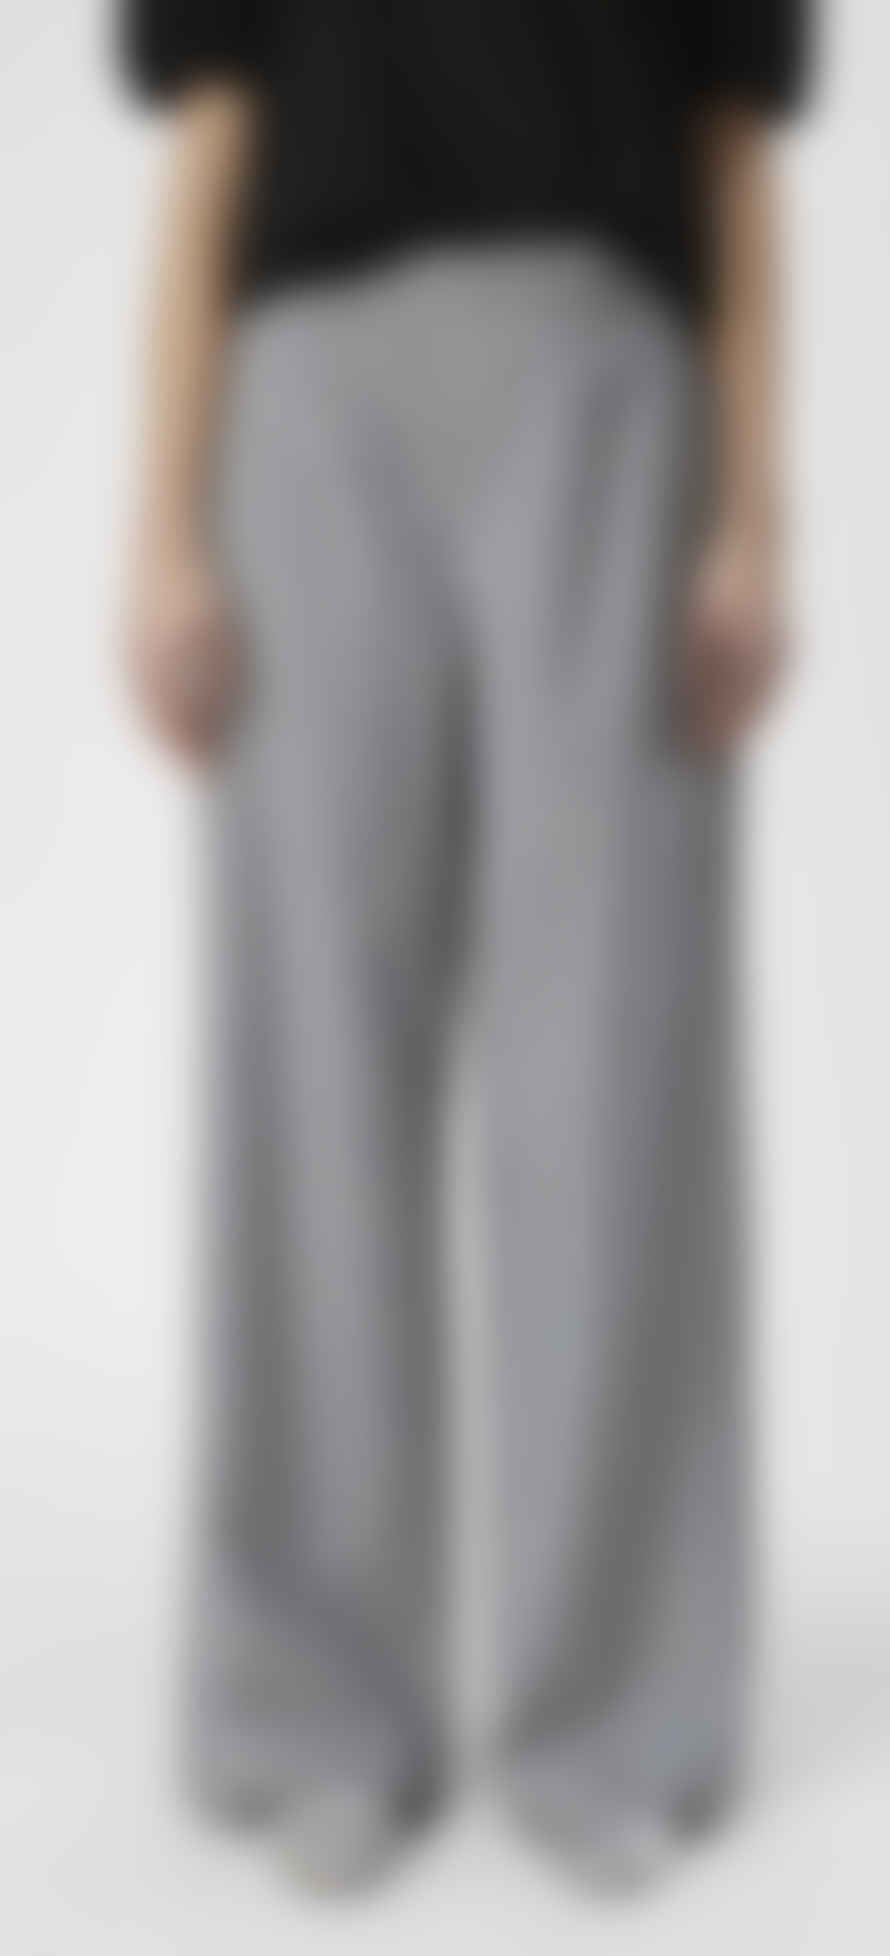 Anorak Object Lisa Wide Leg Long Jeans Grey White Stripe